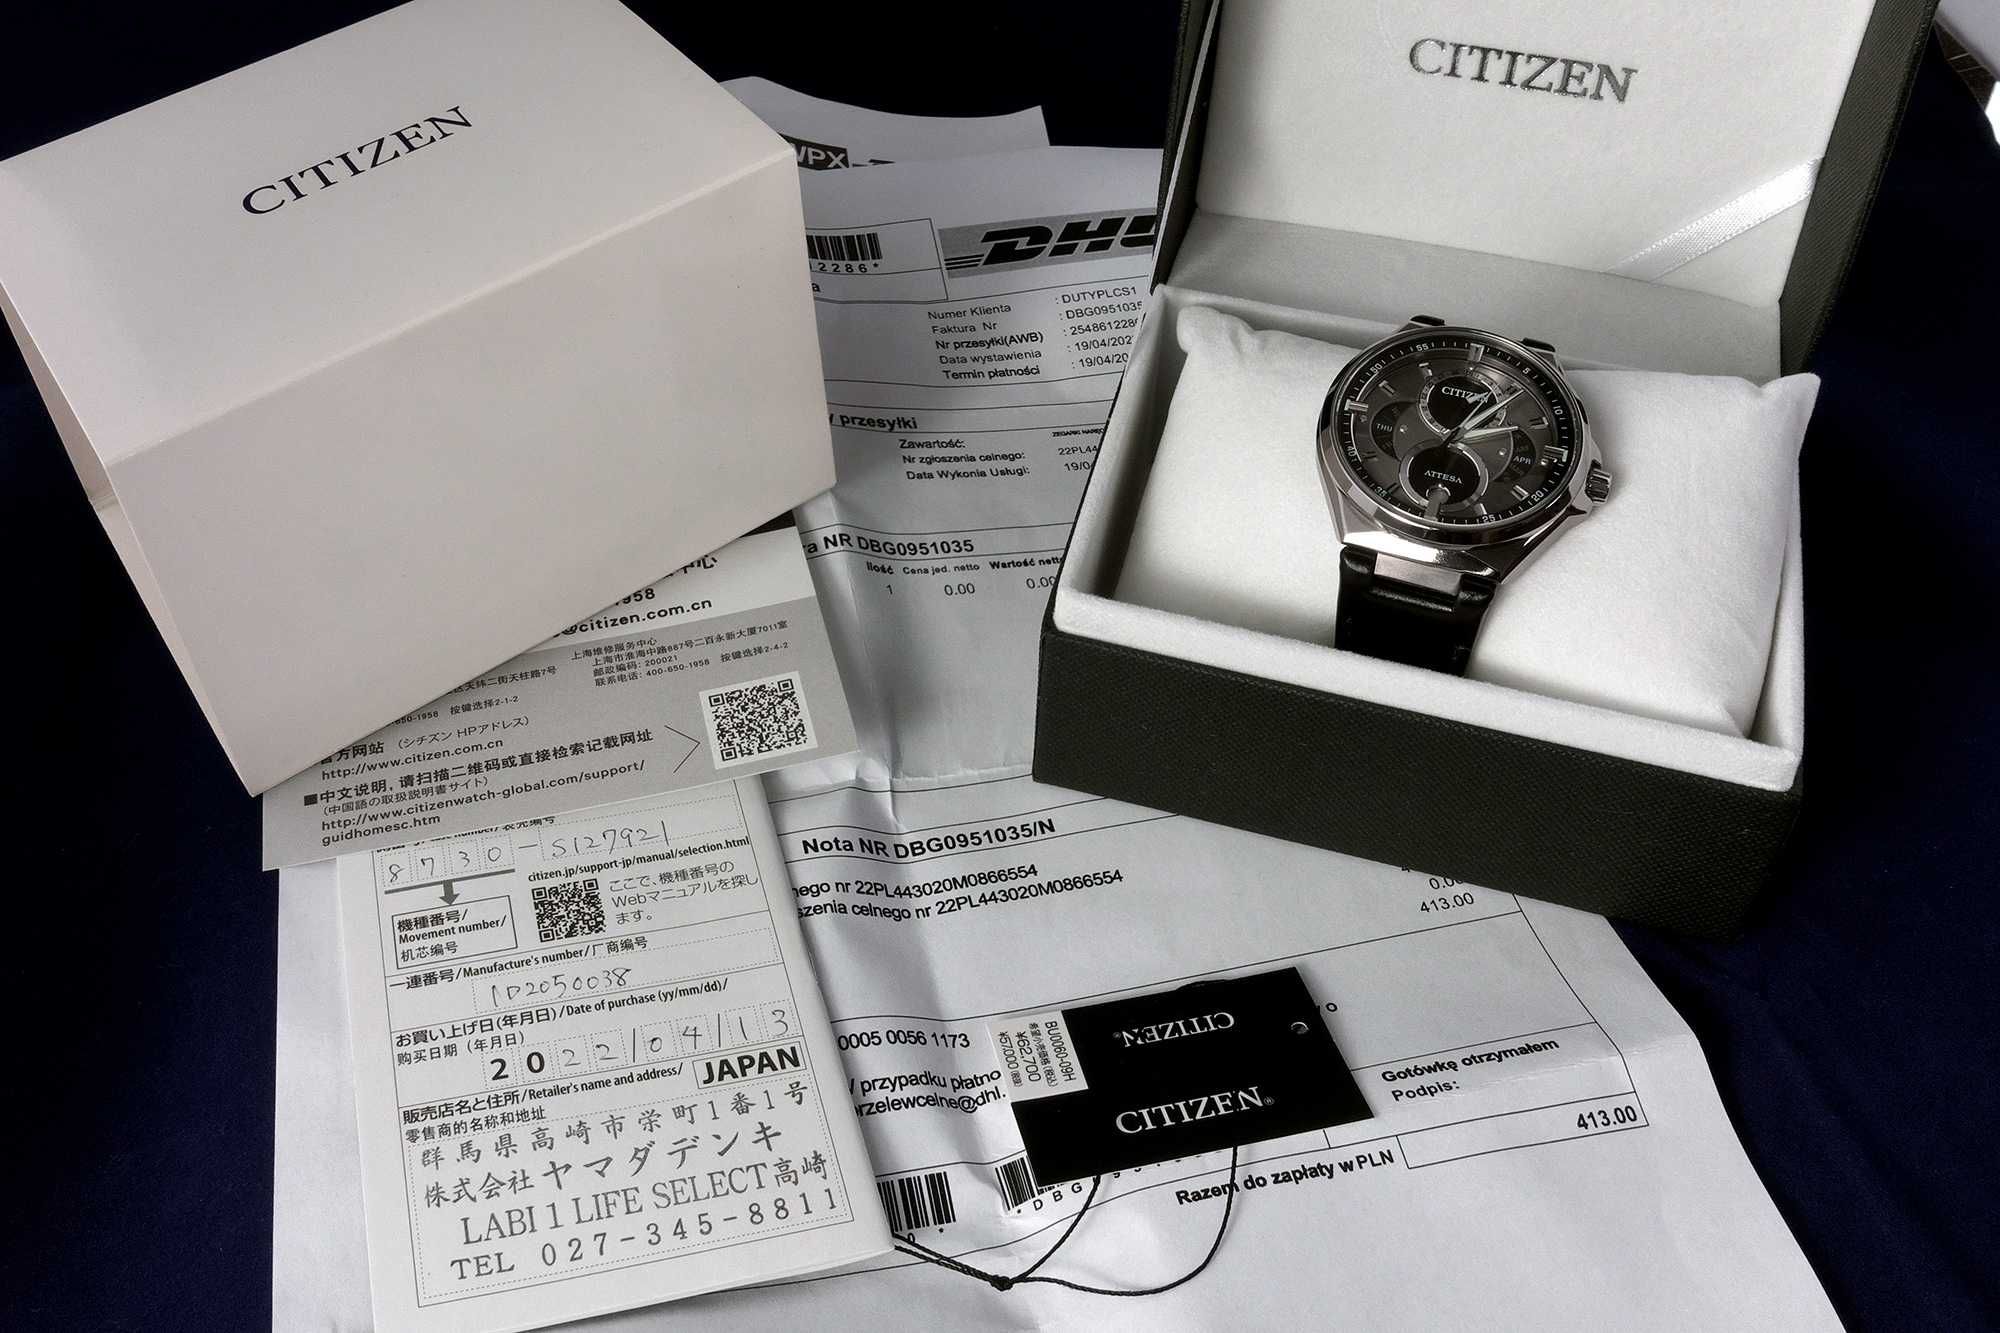 Zegarek Citizen Attesa ACT Line Super Titanium JDM - Prawie nowy !!